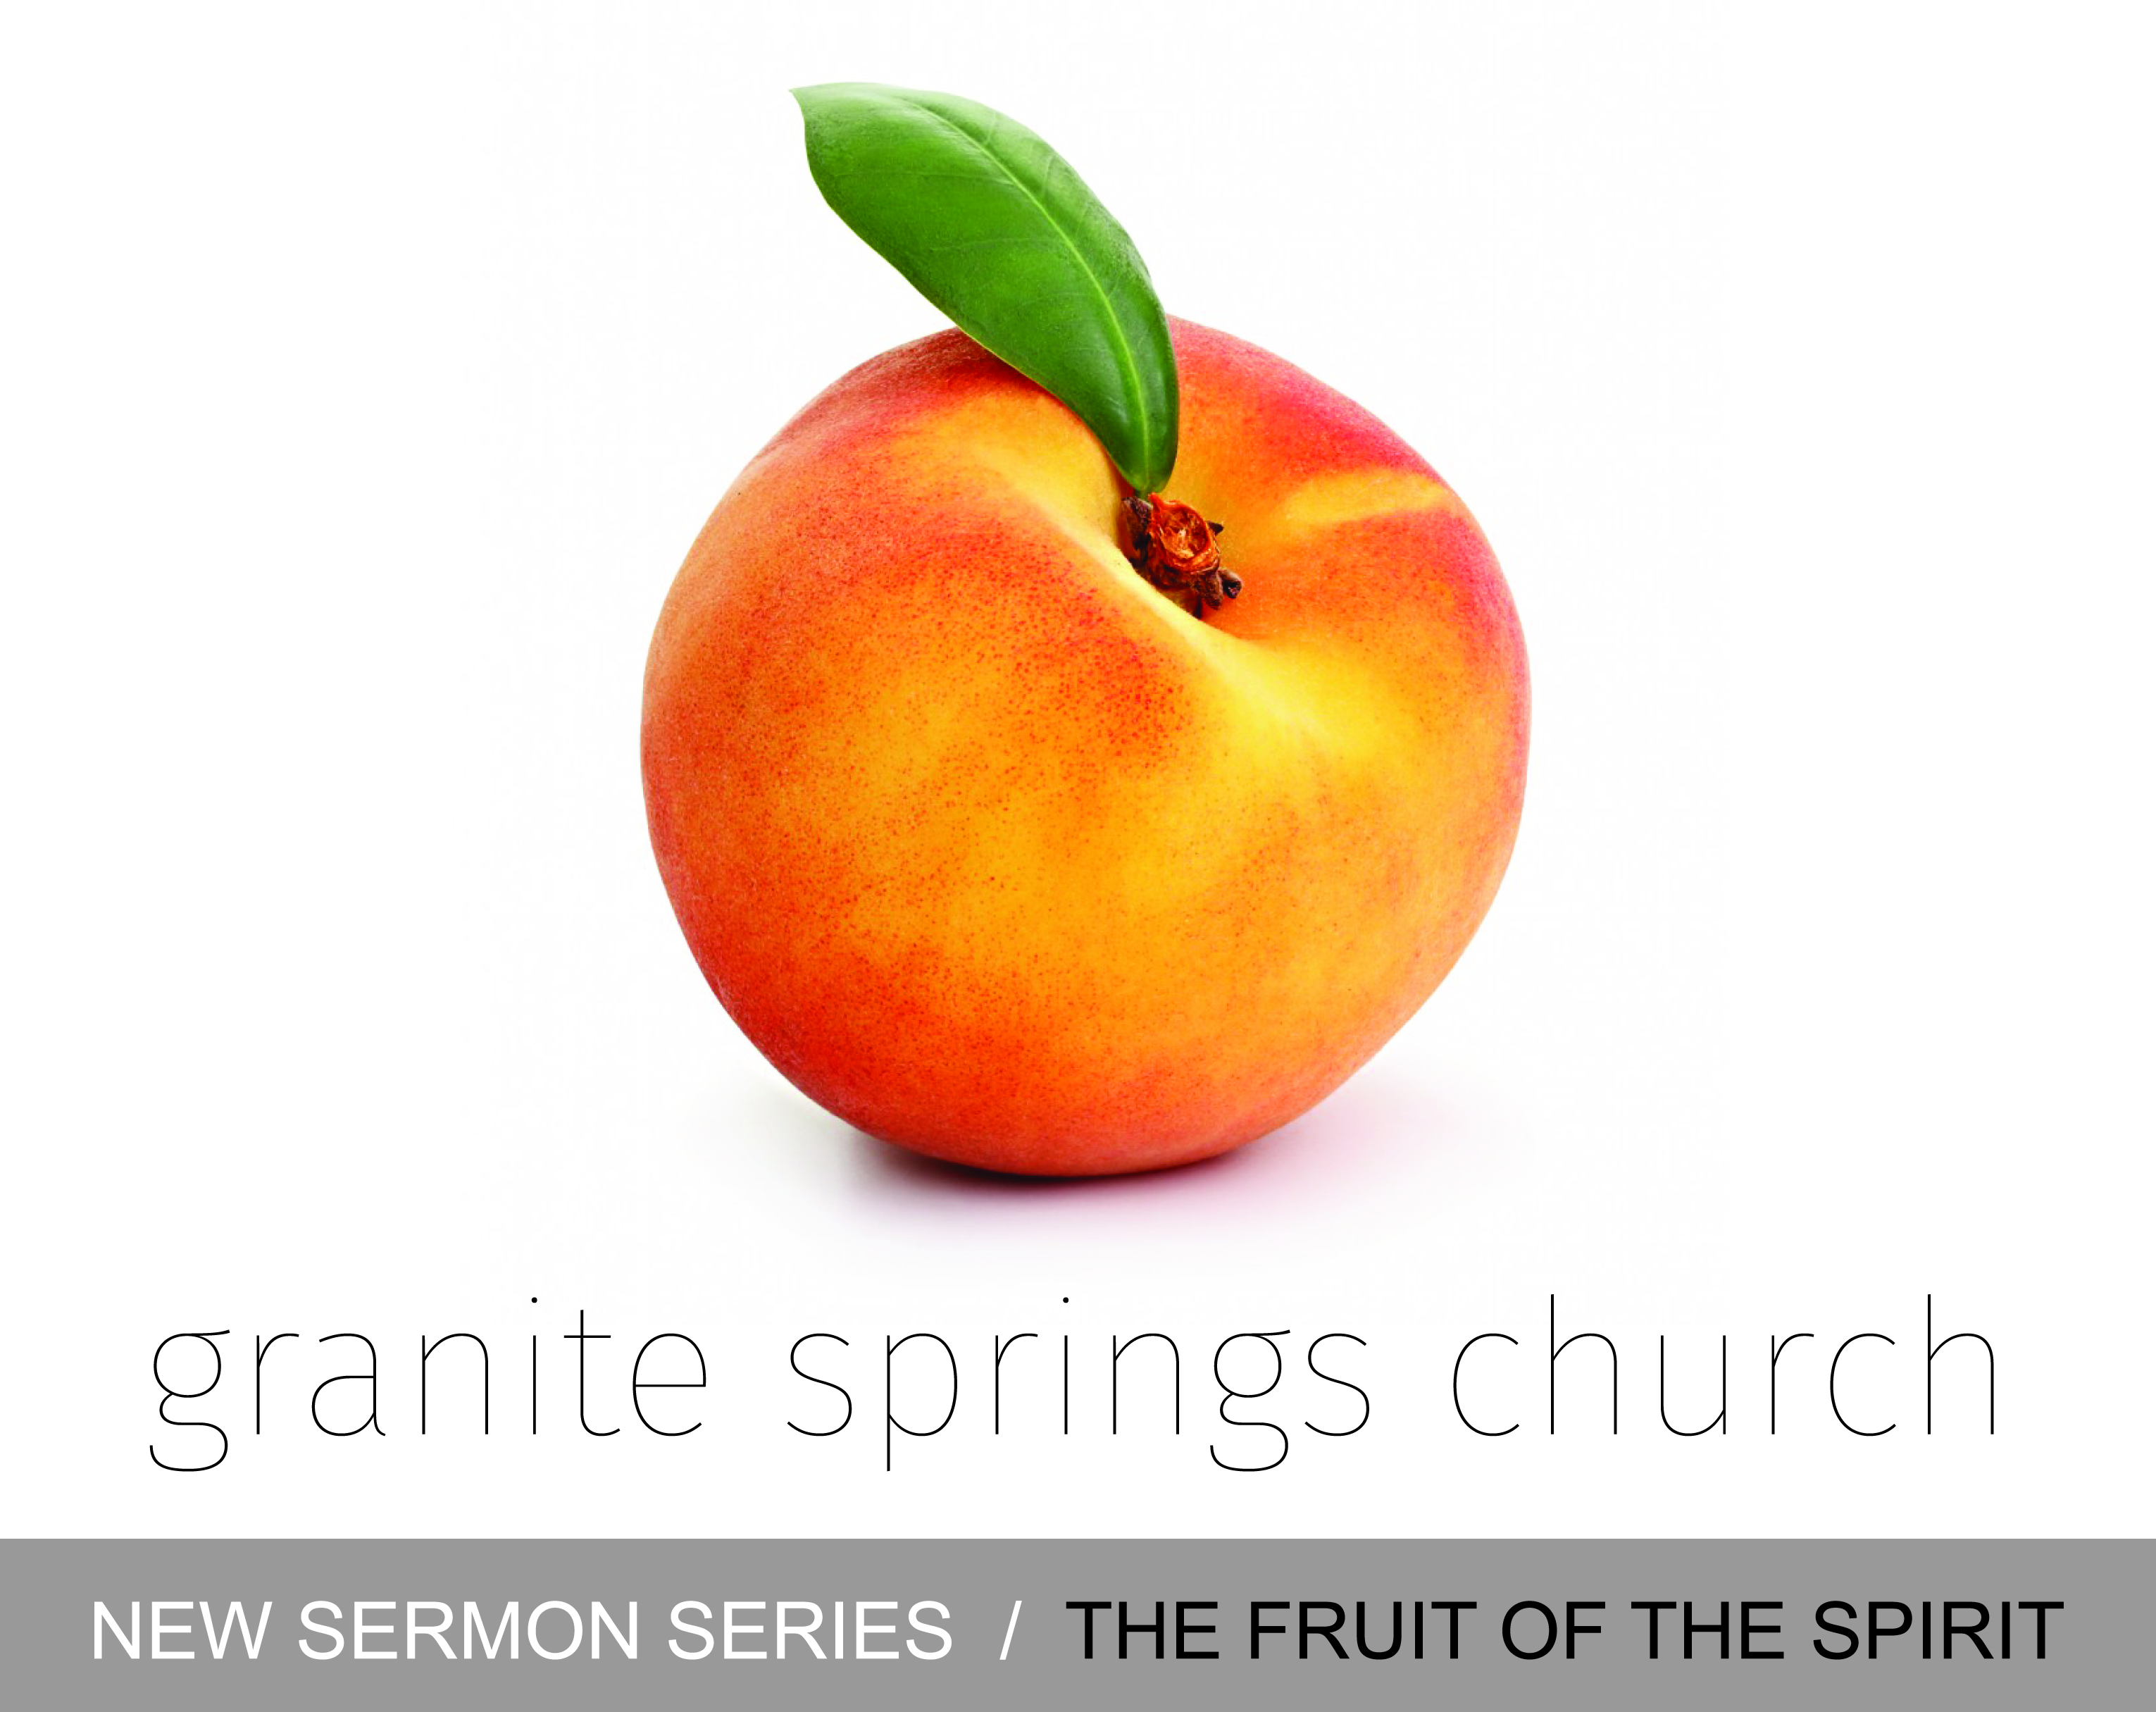 Fruit of the Spirit: Peace